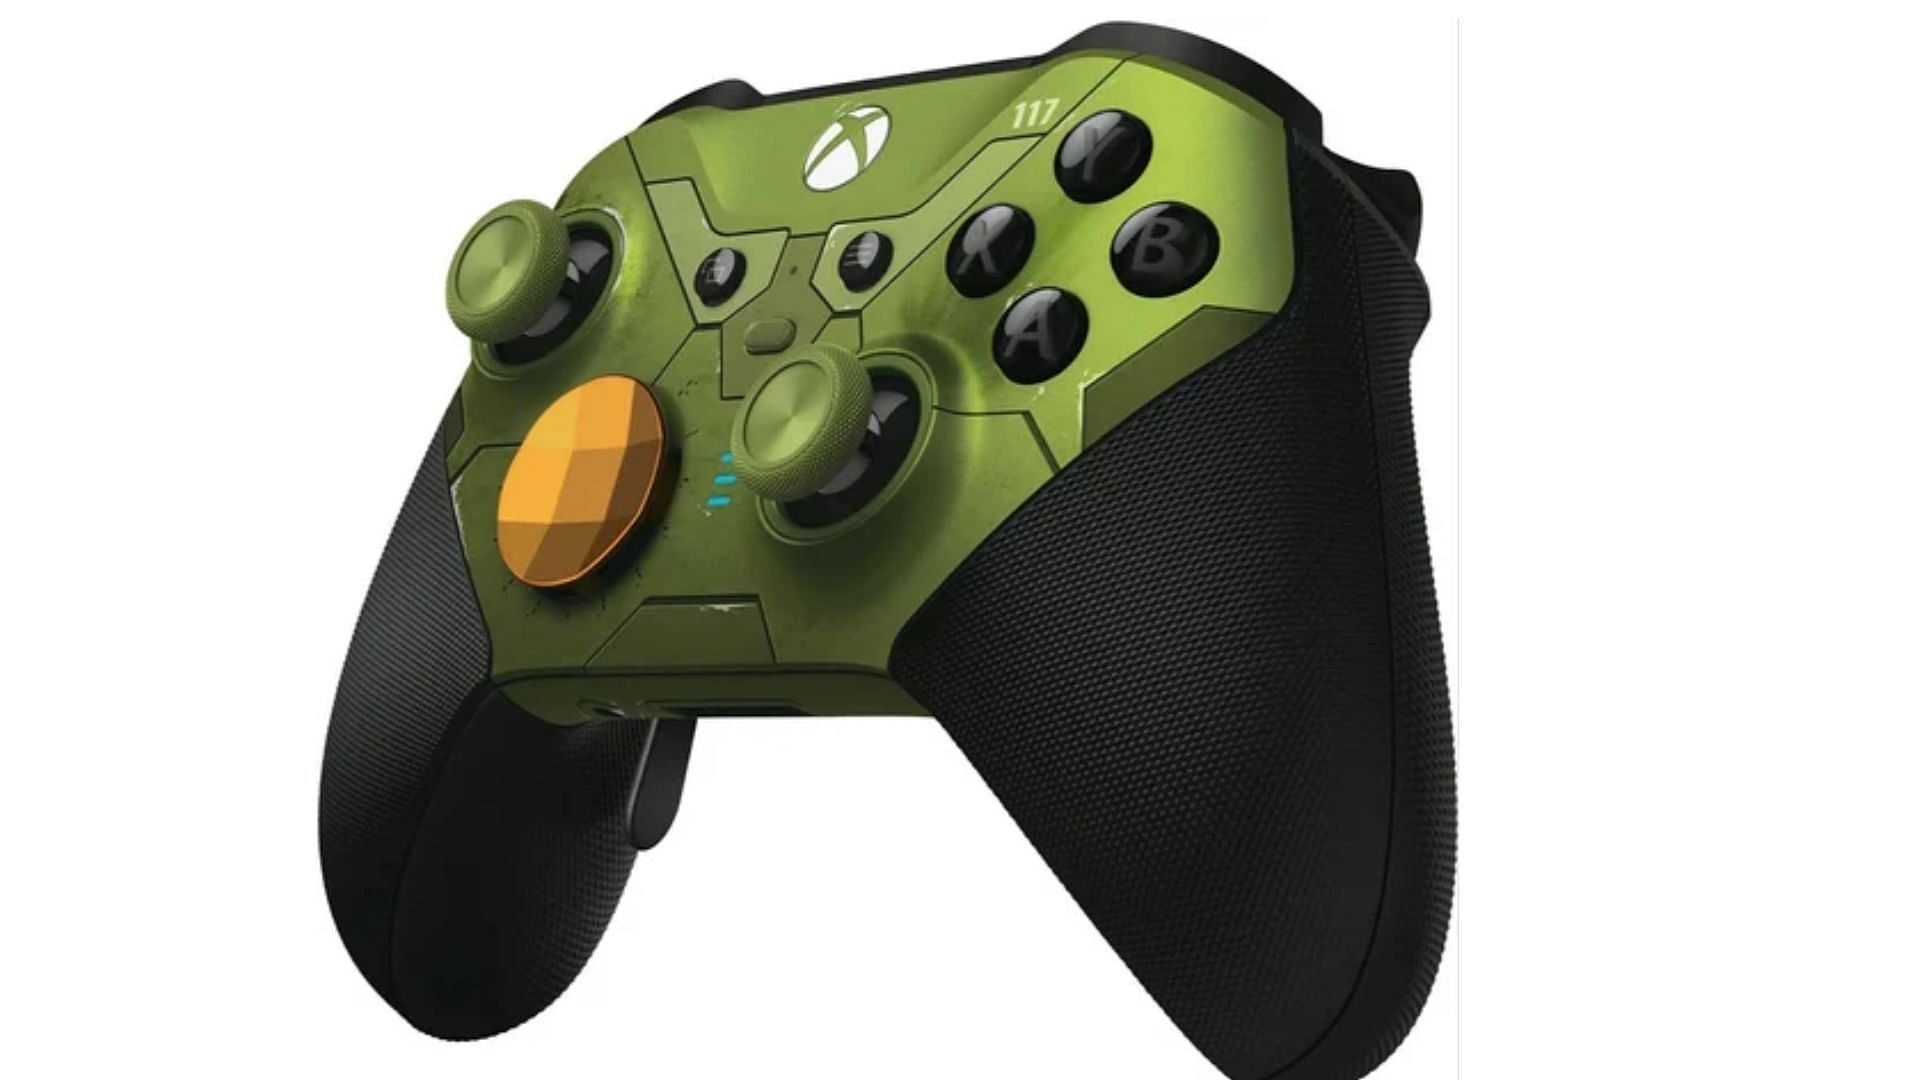 Premium Xbox controller for Series X|S (Image via Xbox/IndiaMart)